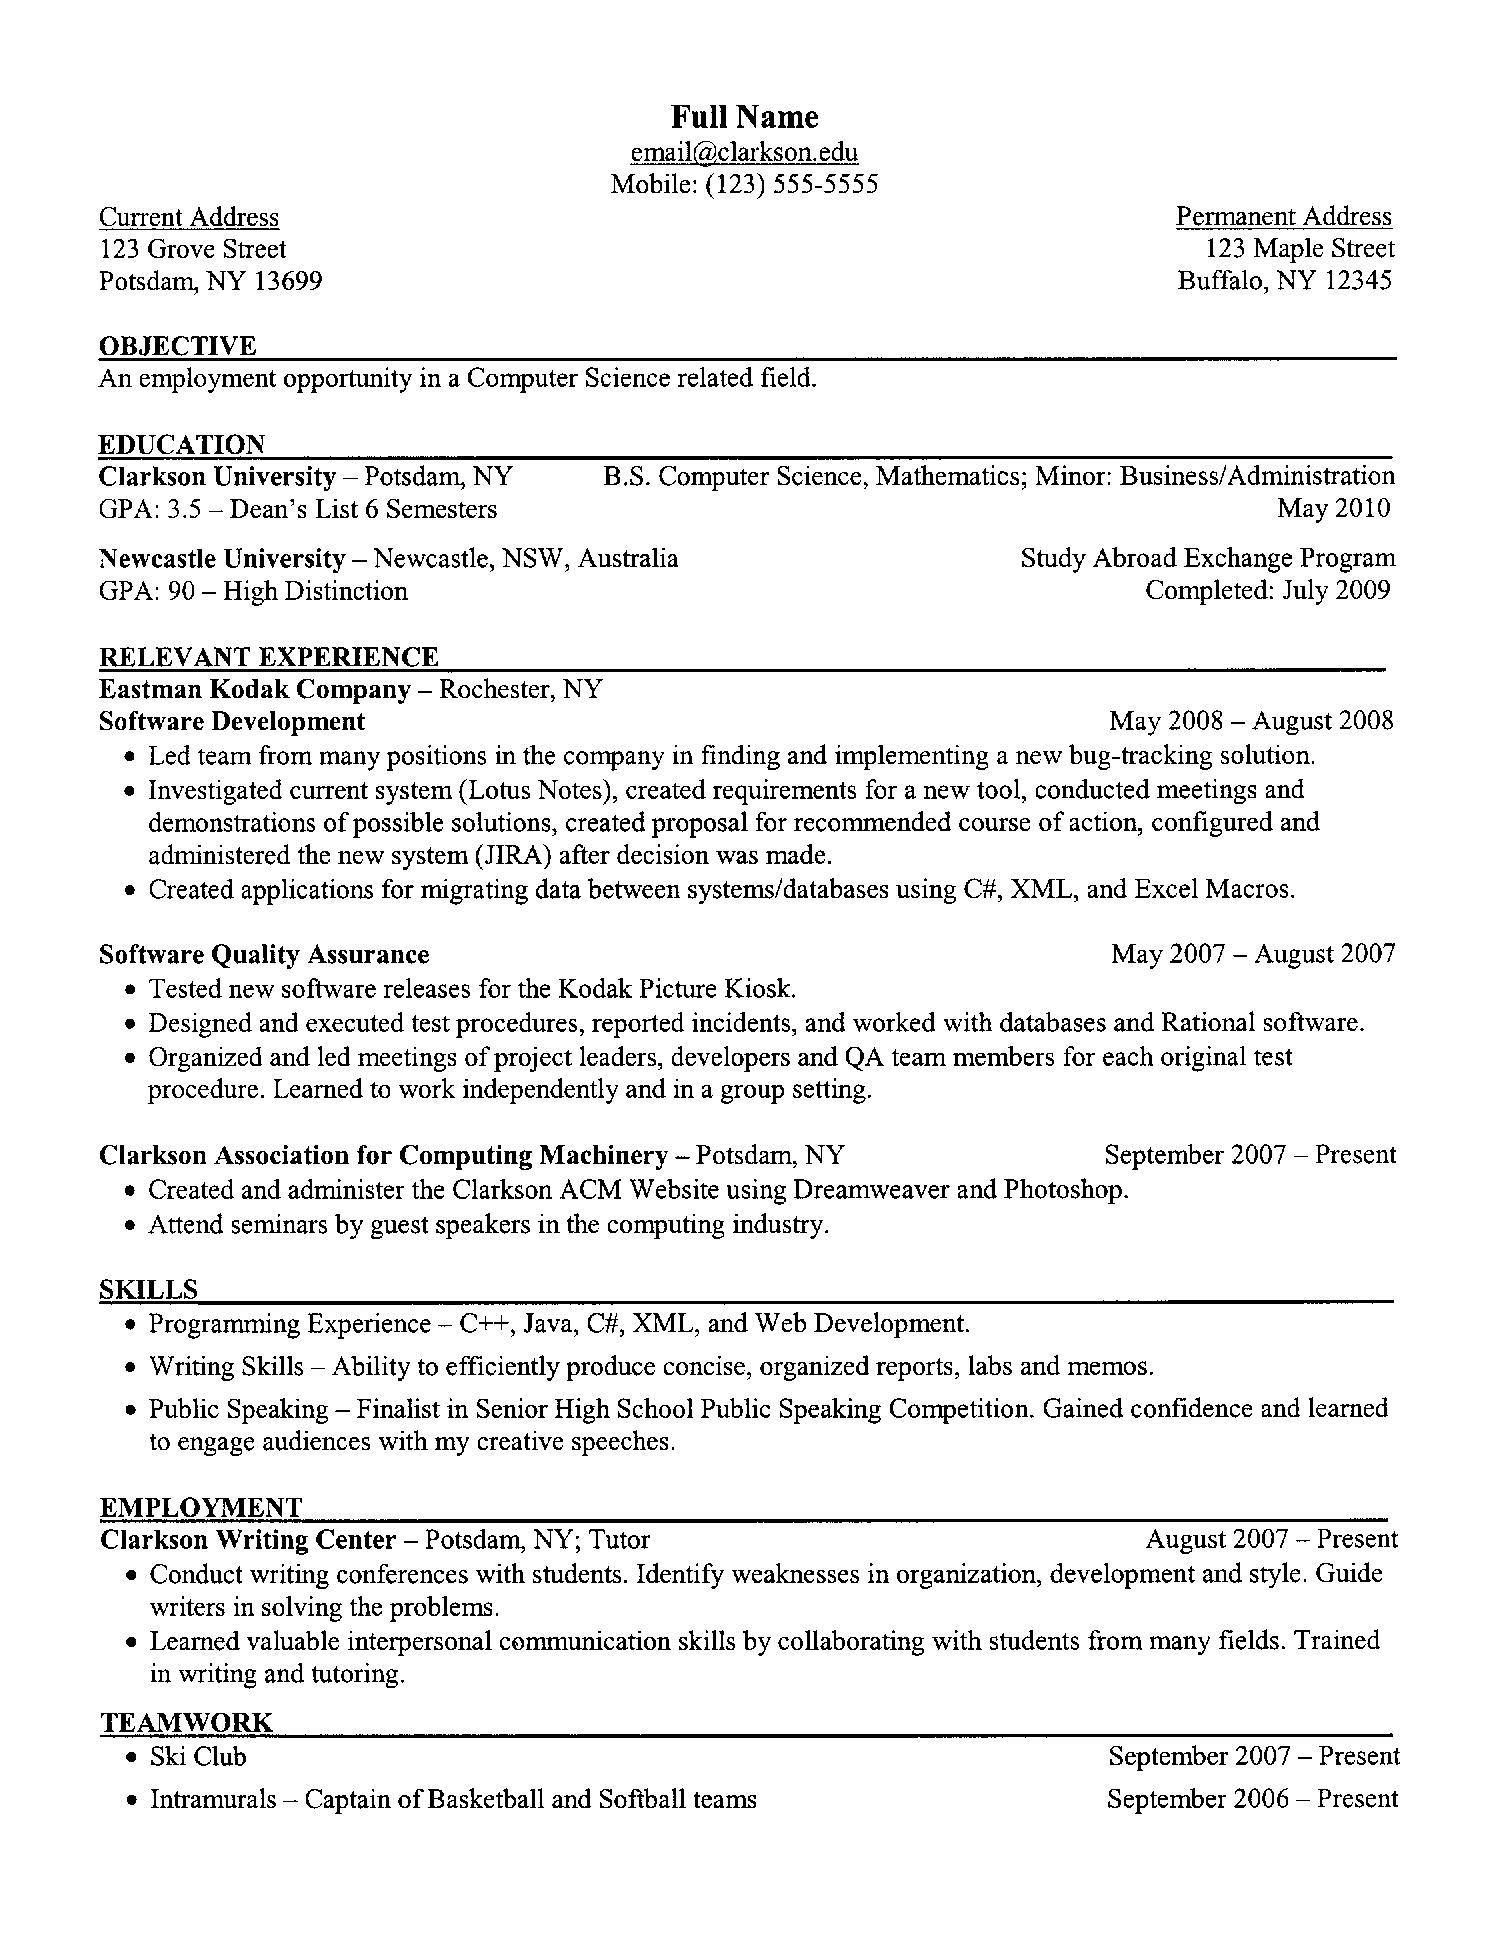 Sample Resume for Computer Science Senior Resume Templates Computer Science – Resume Templates Student …